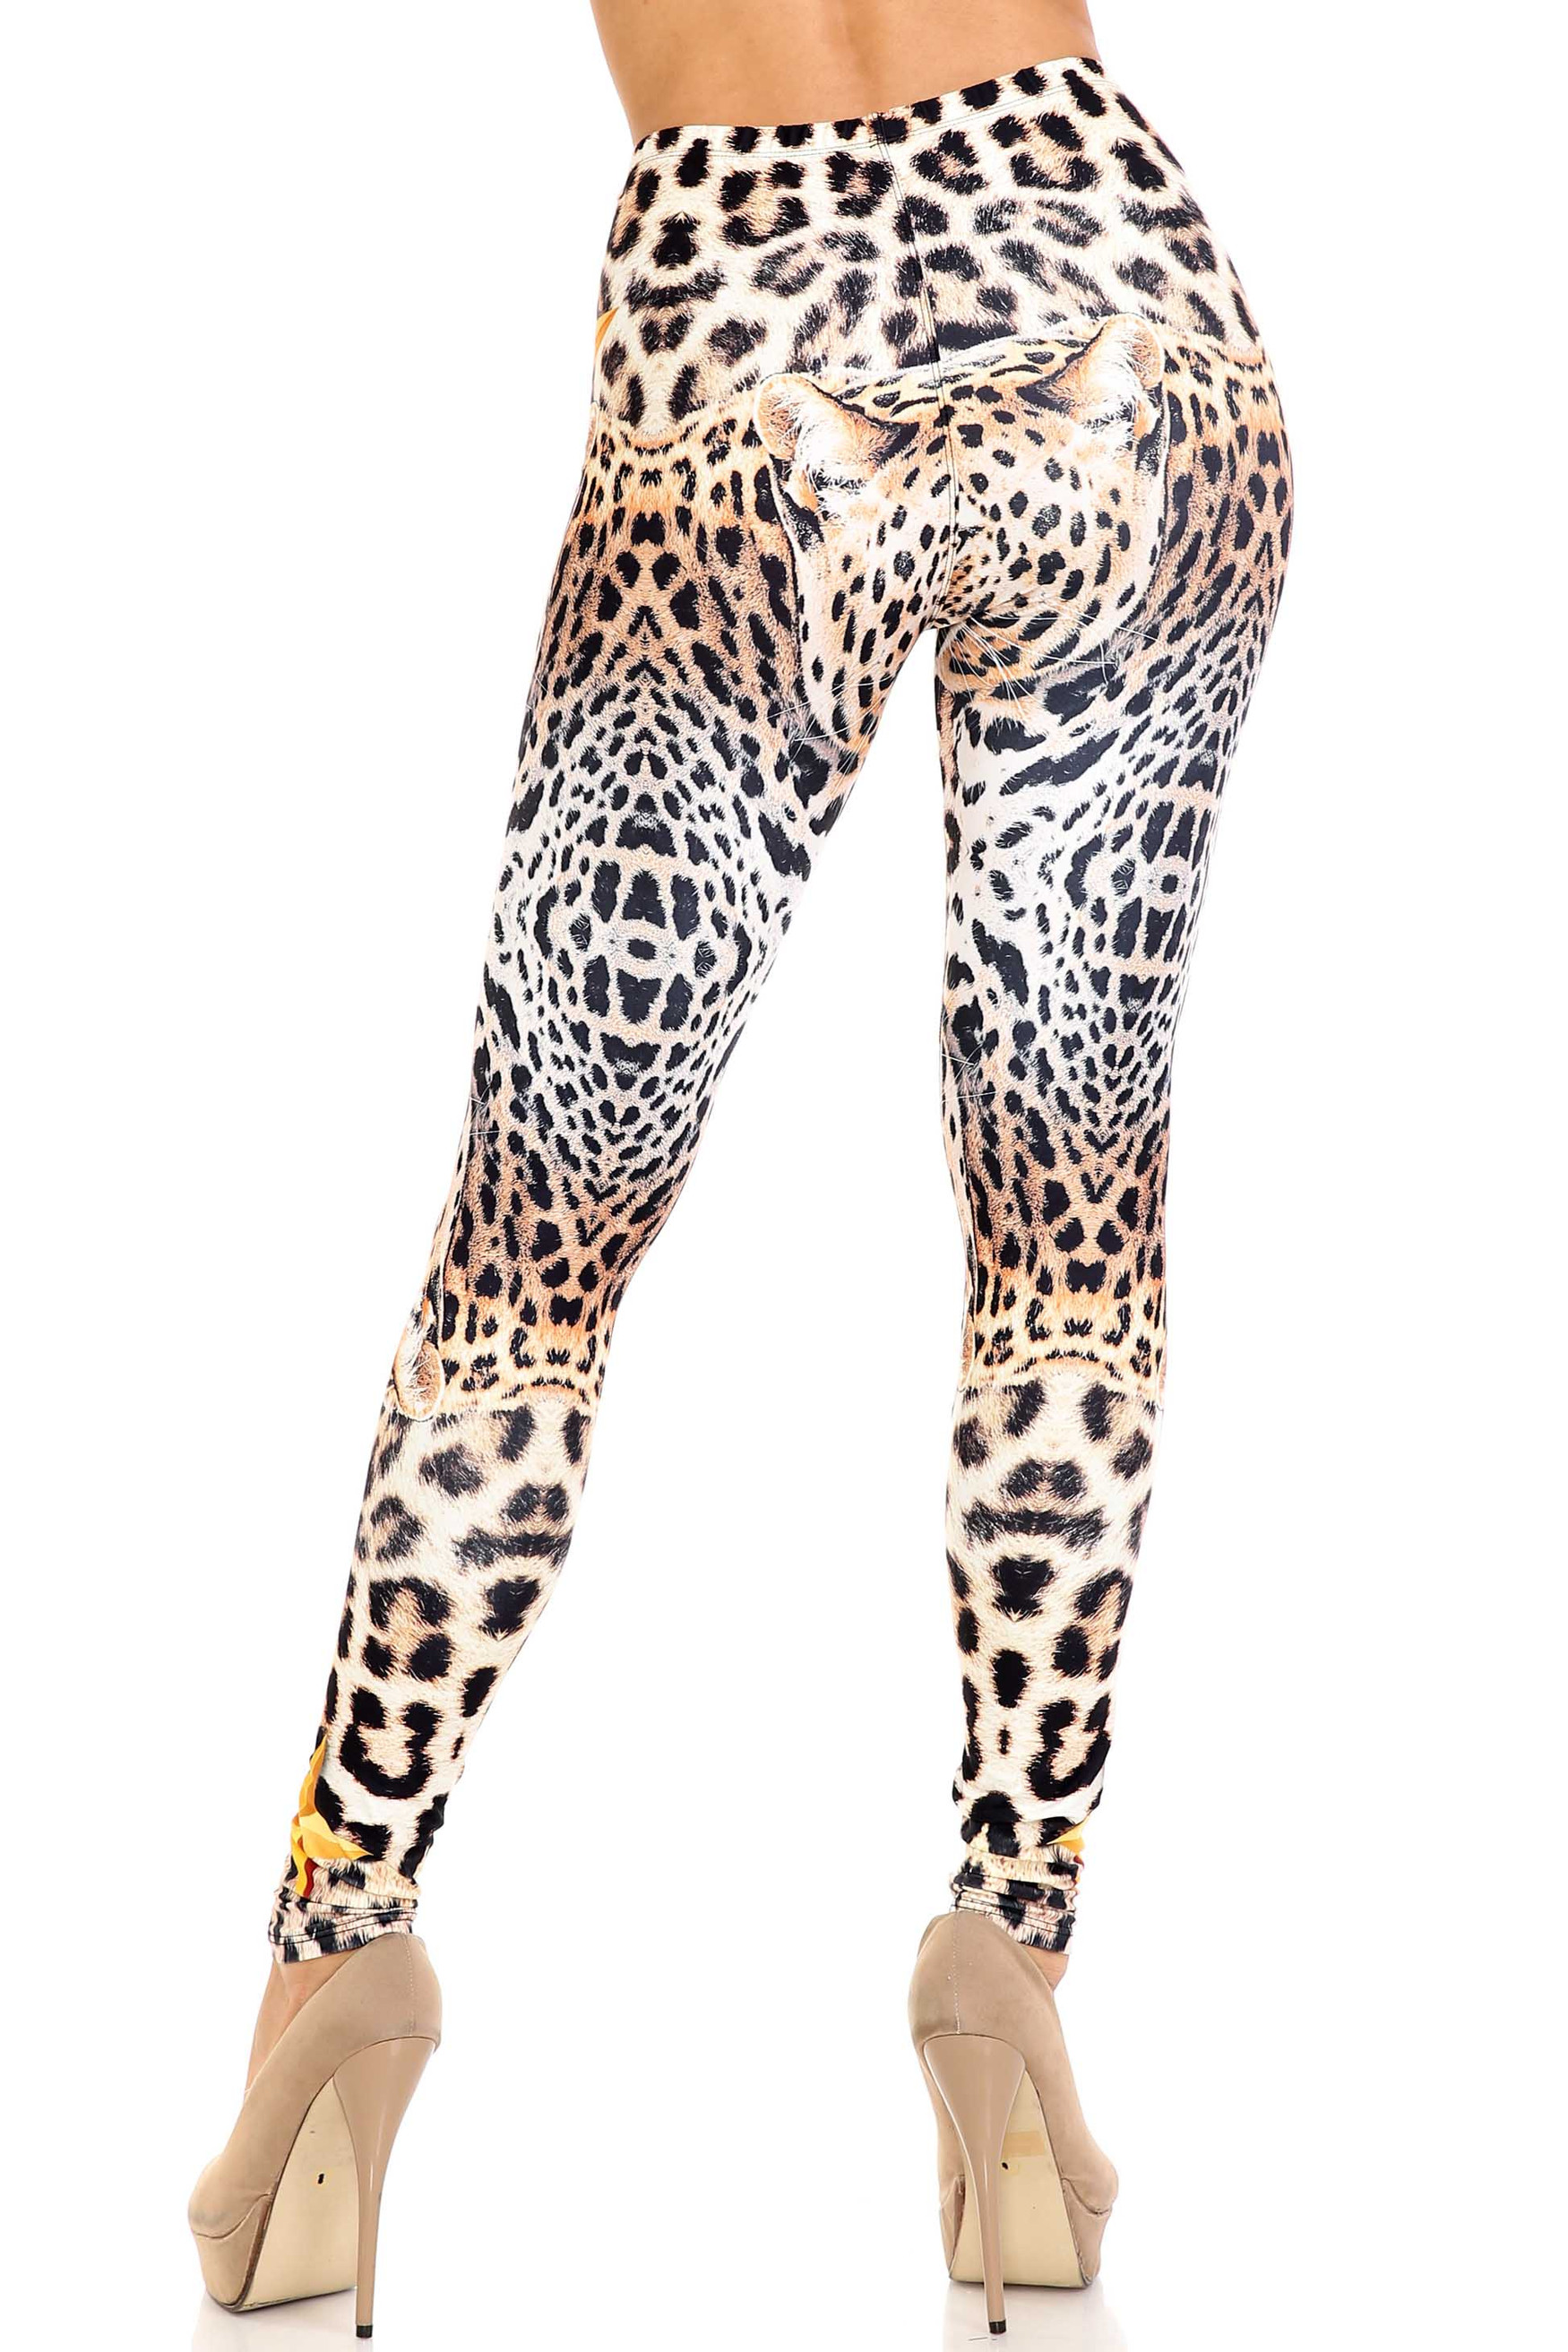 Creamy Soft Leopard Star Extra Plus Size Leggings - 3X-5X - USA Fashion™